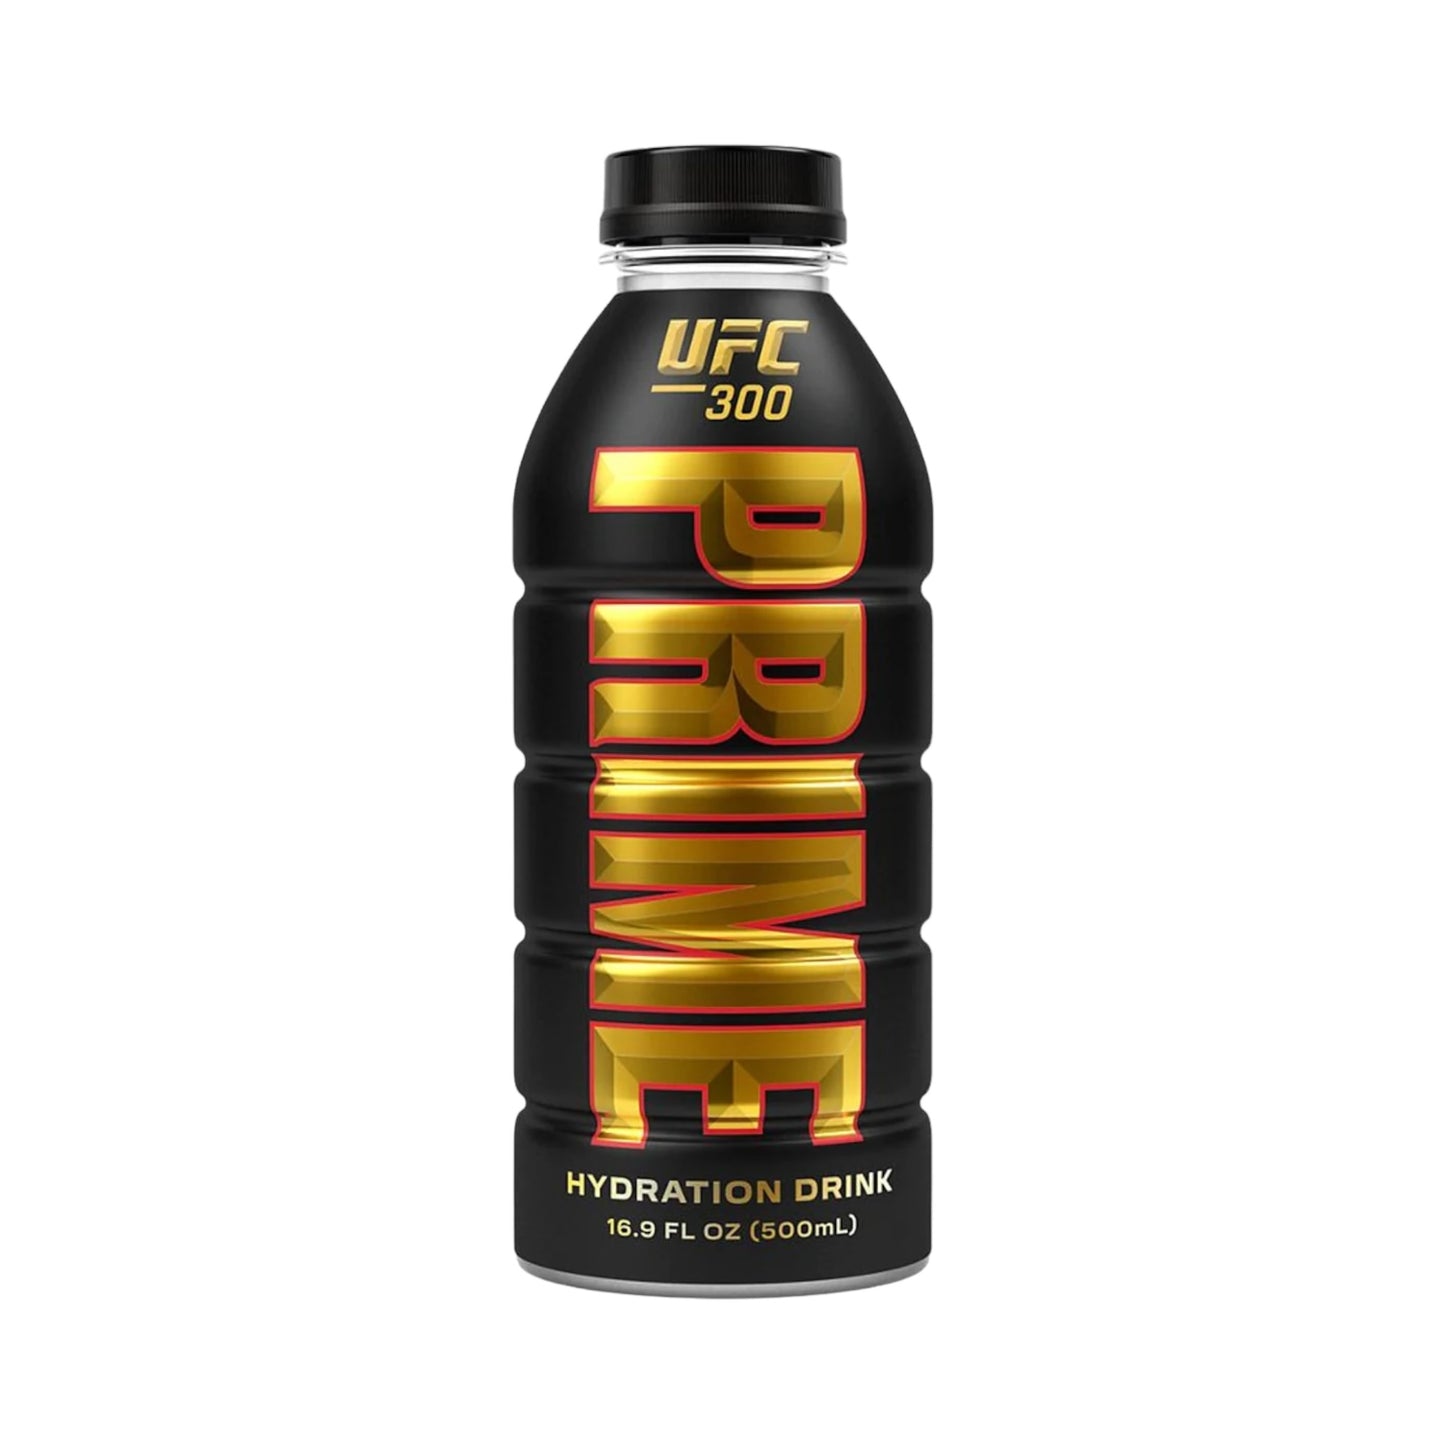 PRIME Hydration UFC 300 - 16.9 fl oz (500ml)